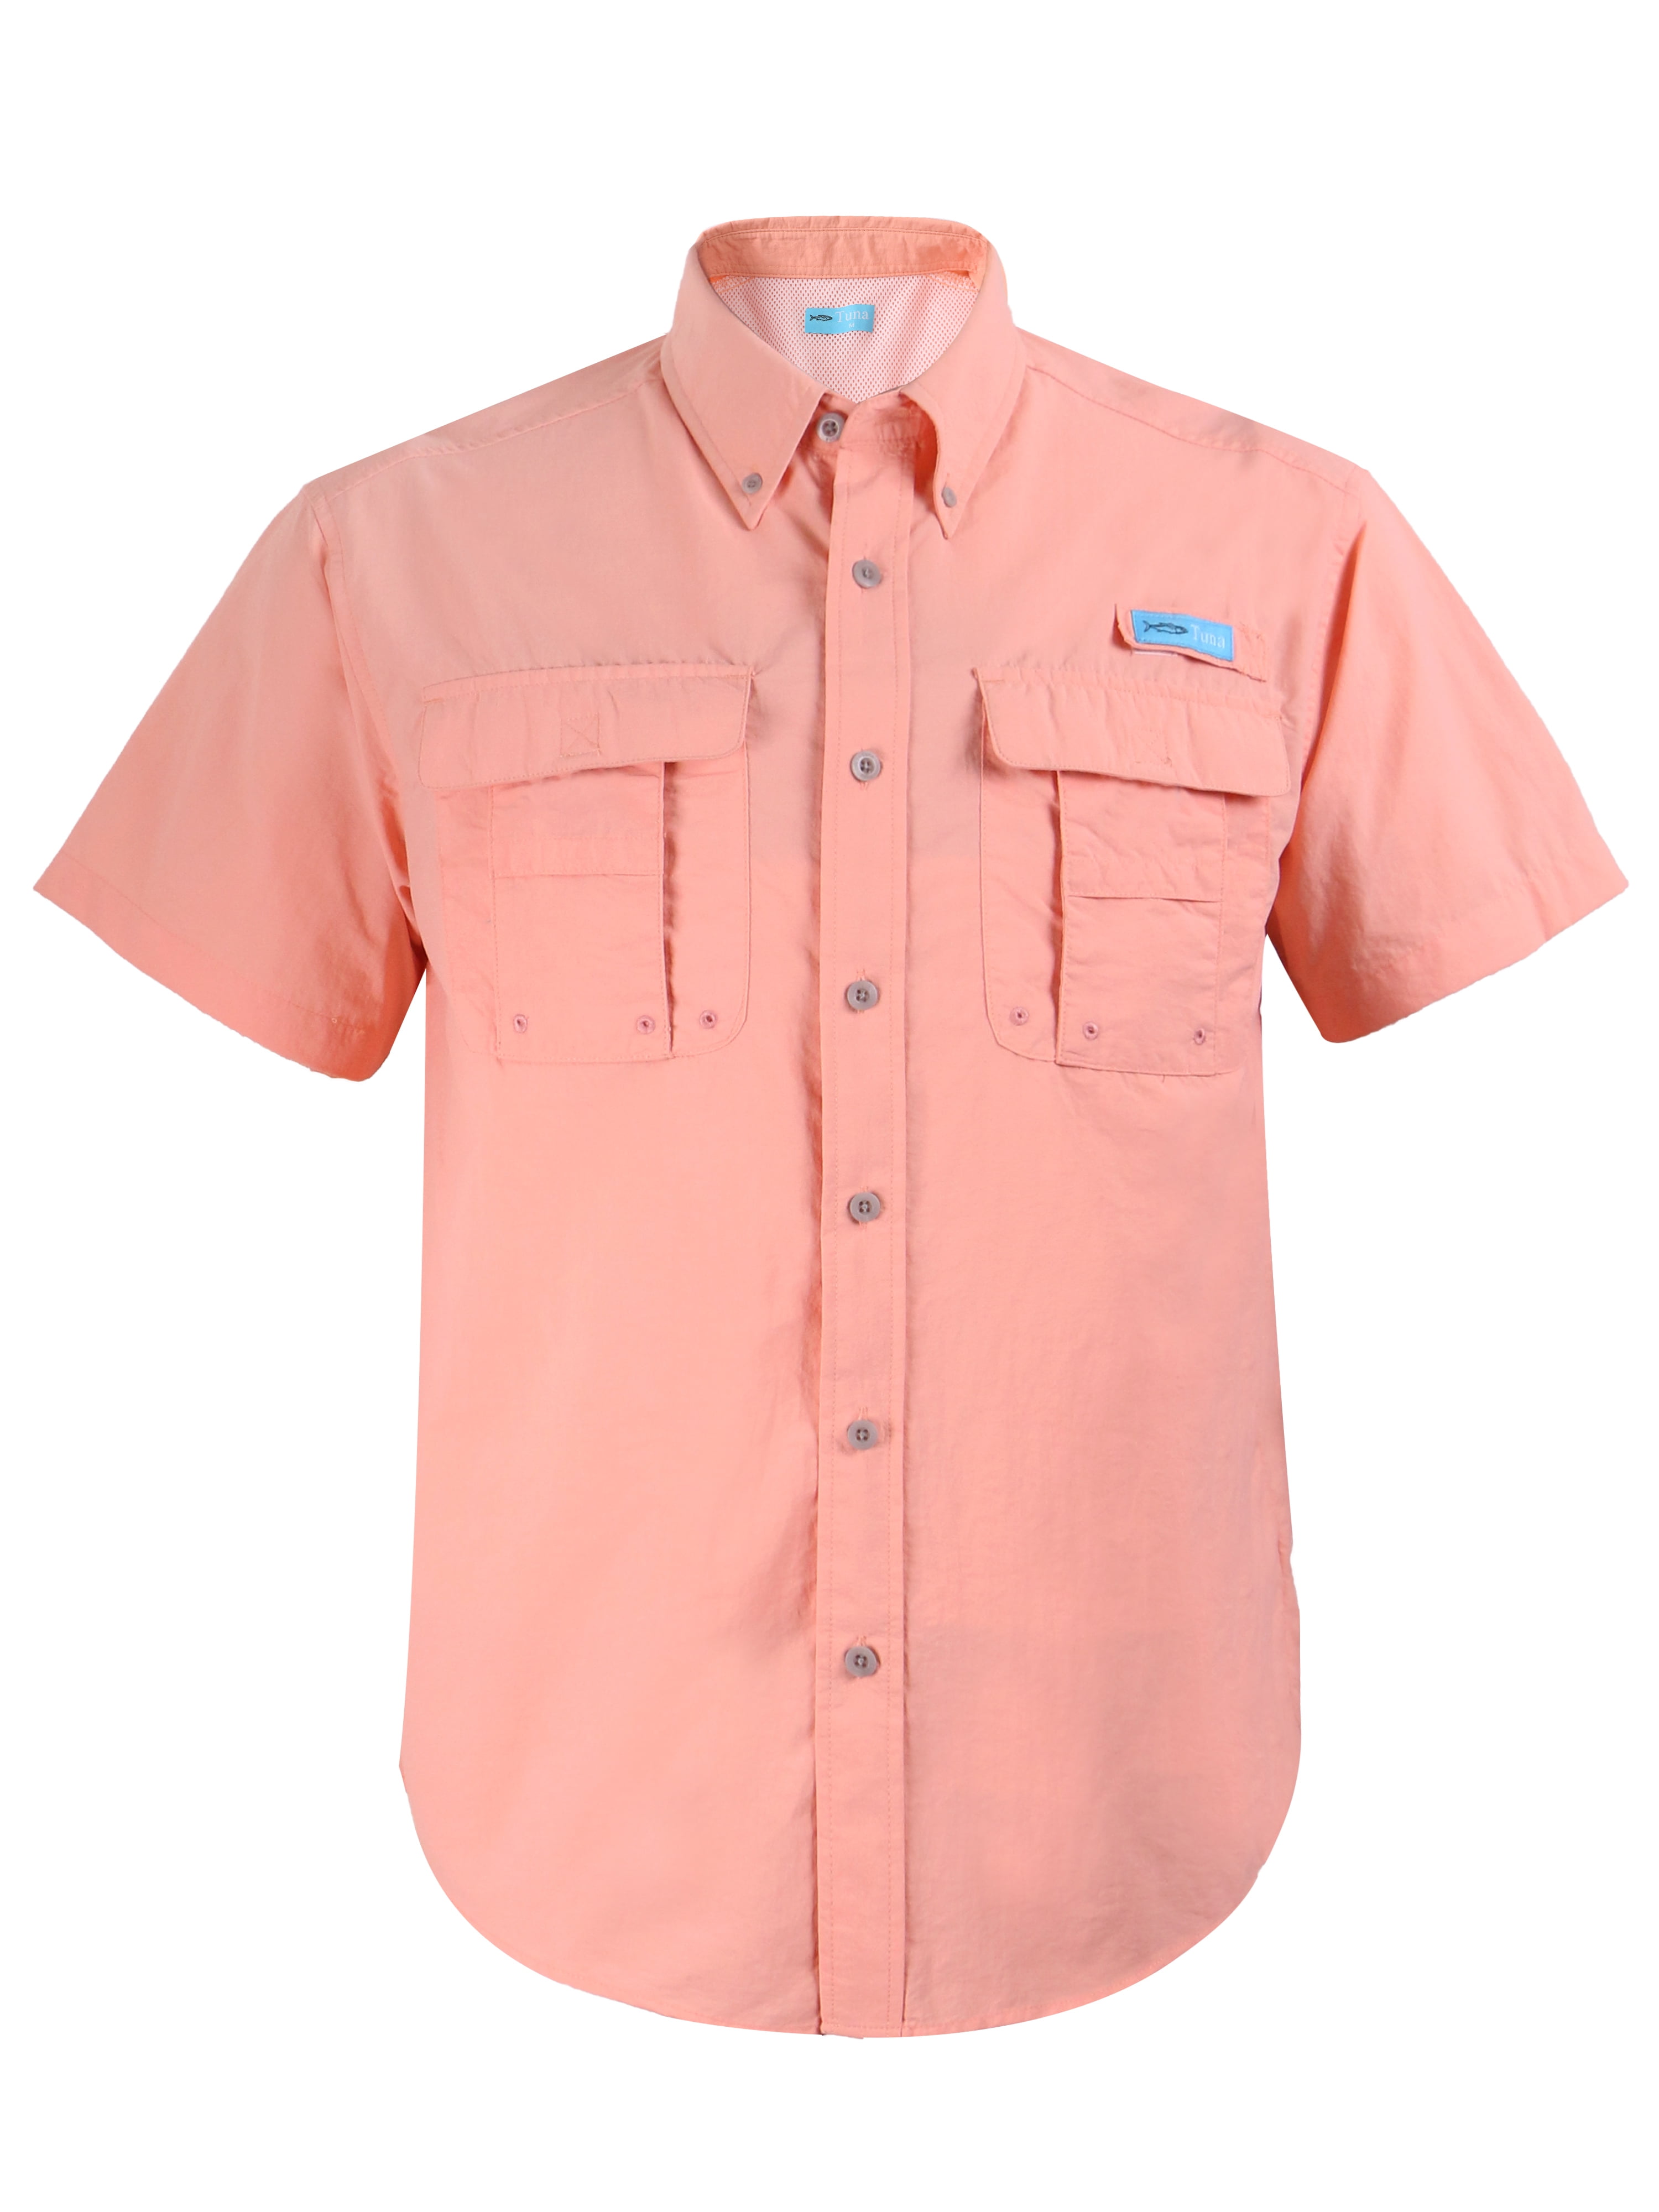 Hook Tackle Fishing Shirts Outdoor Short Sleeve Mesh T-shirt Sun Protection  Fishing Jersey Breathable Angling Clothing Upf 50+ - AliExpress